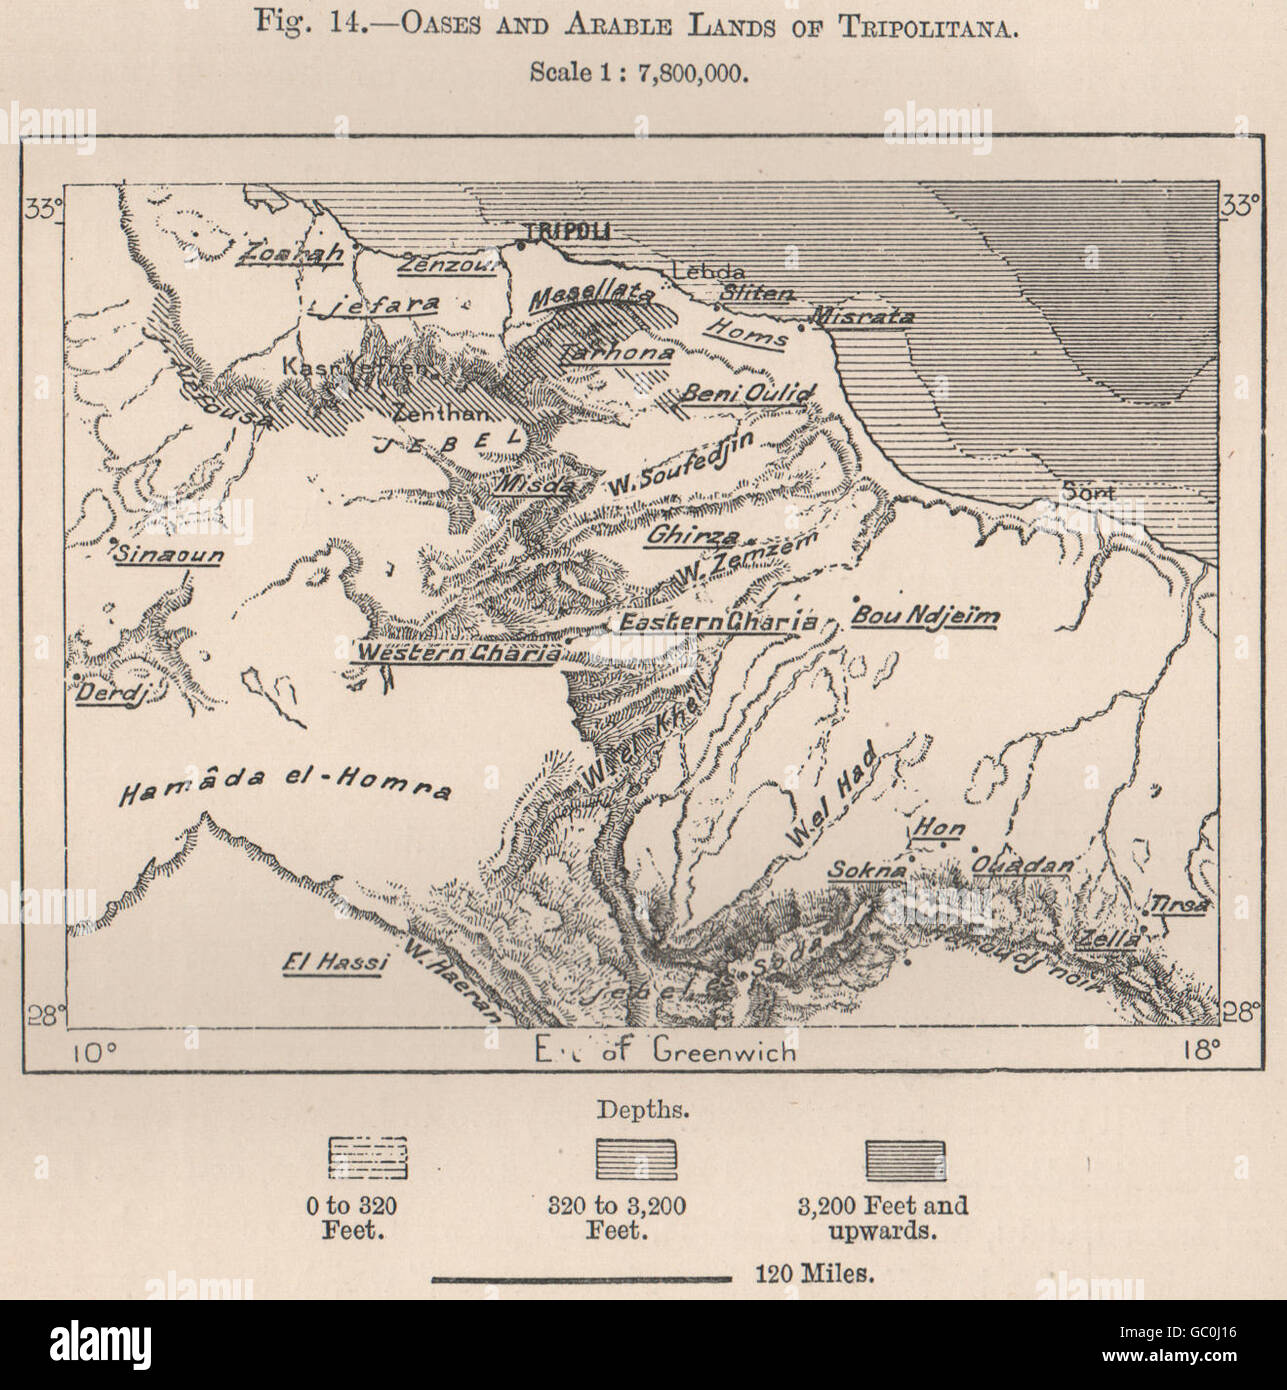 Oases & Arable lands of Tripolitana. Libya, 1885 antique map Stock Photo